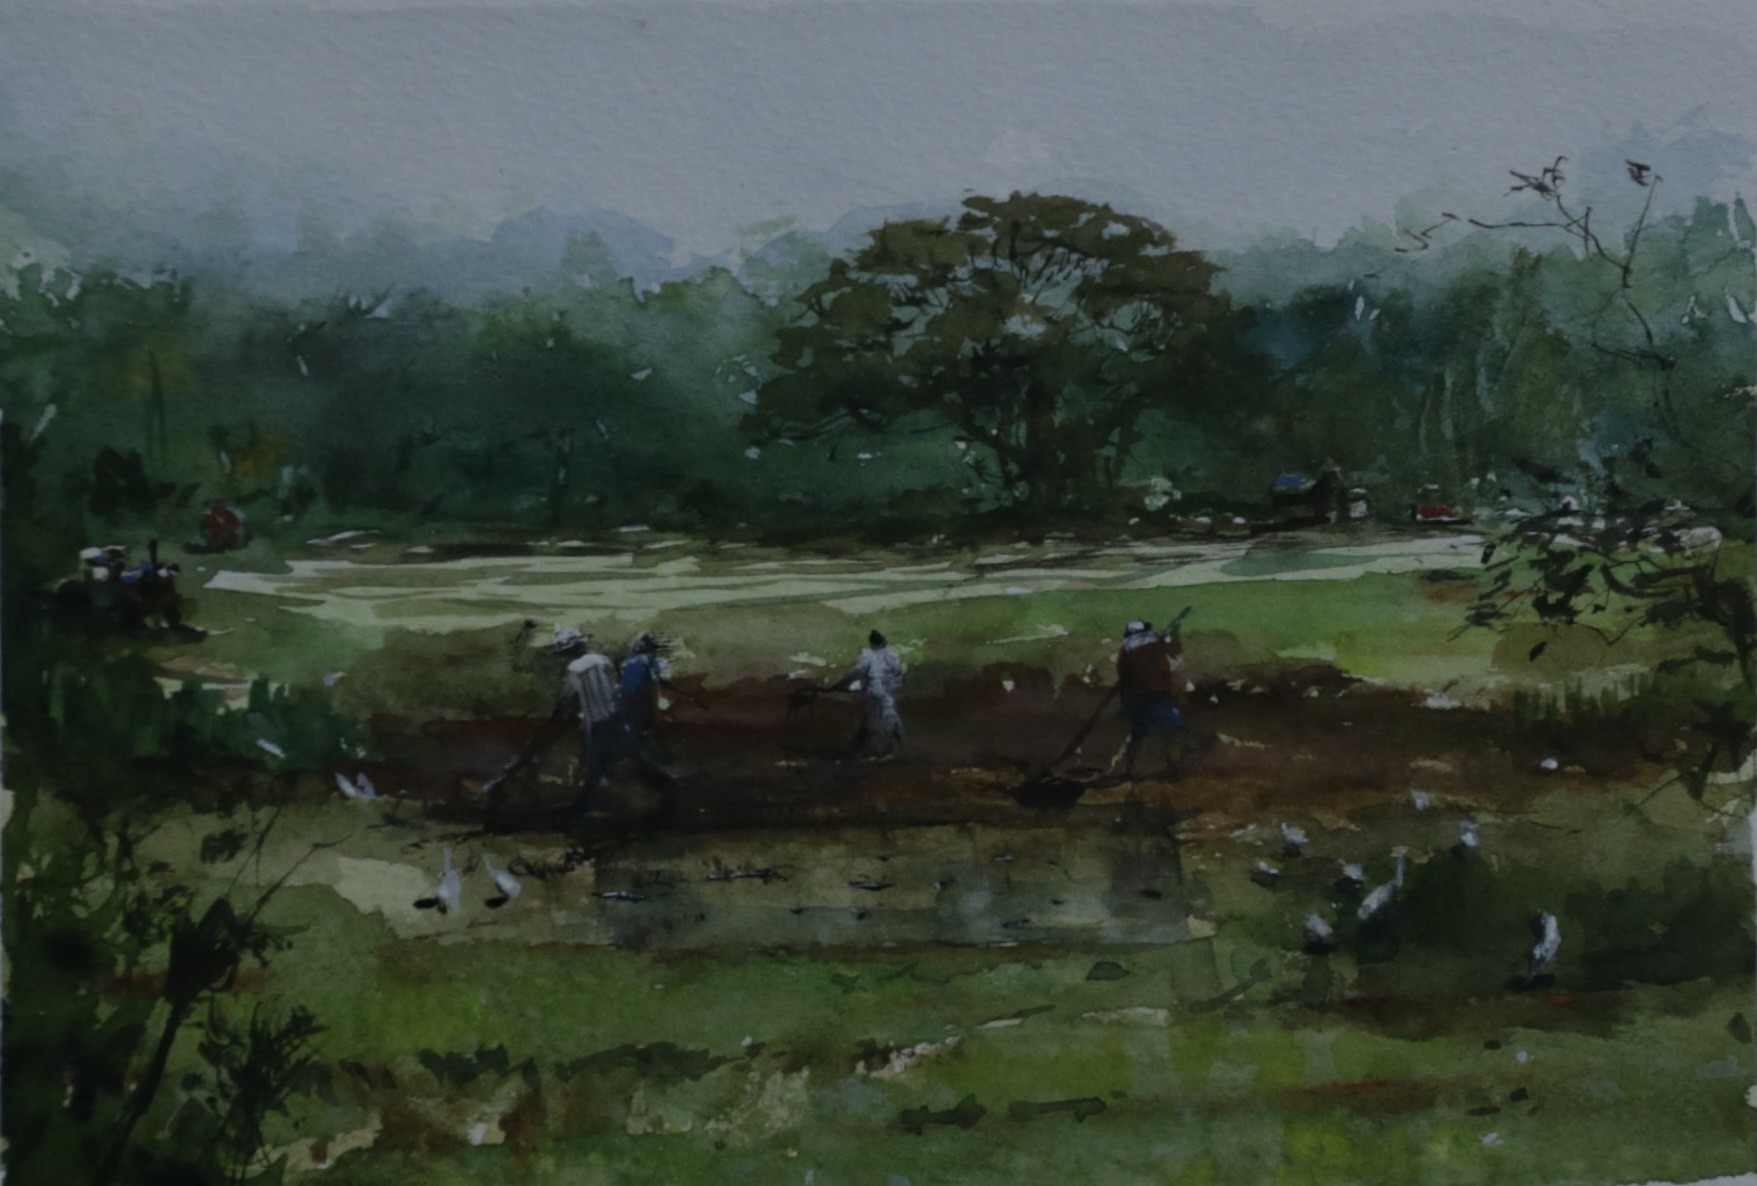 Muddy paddy by Kamalawarna Herath